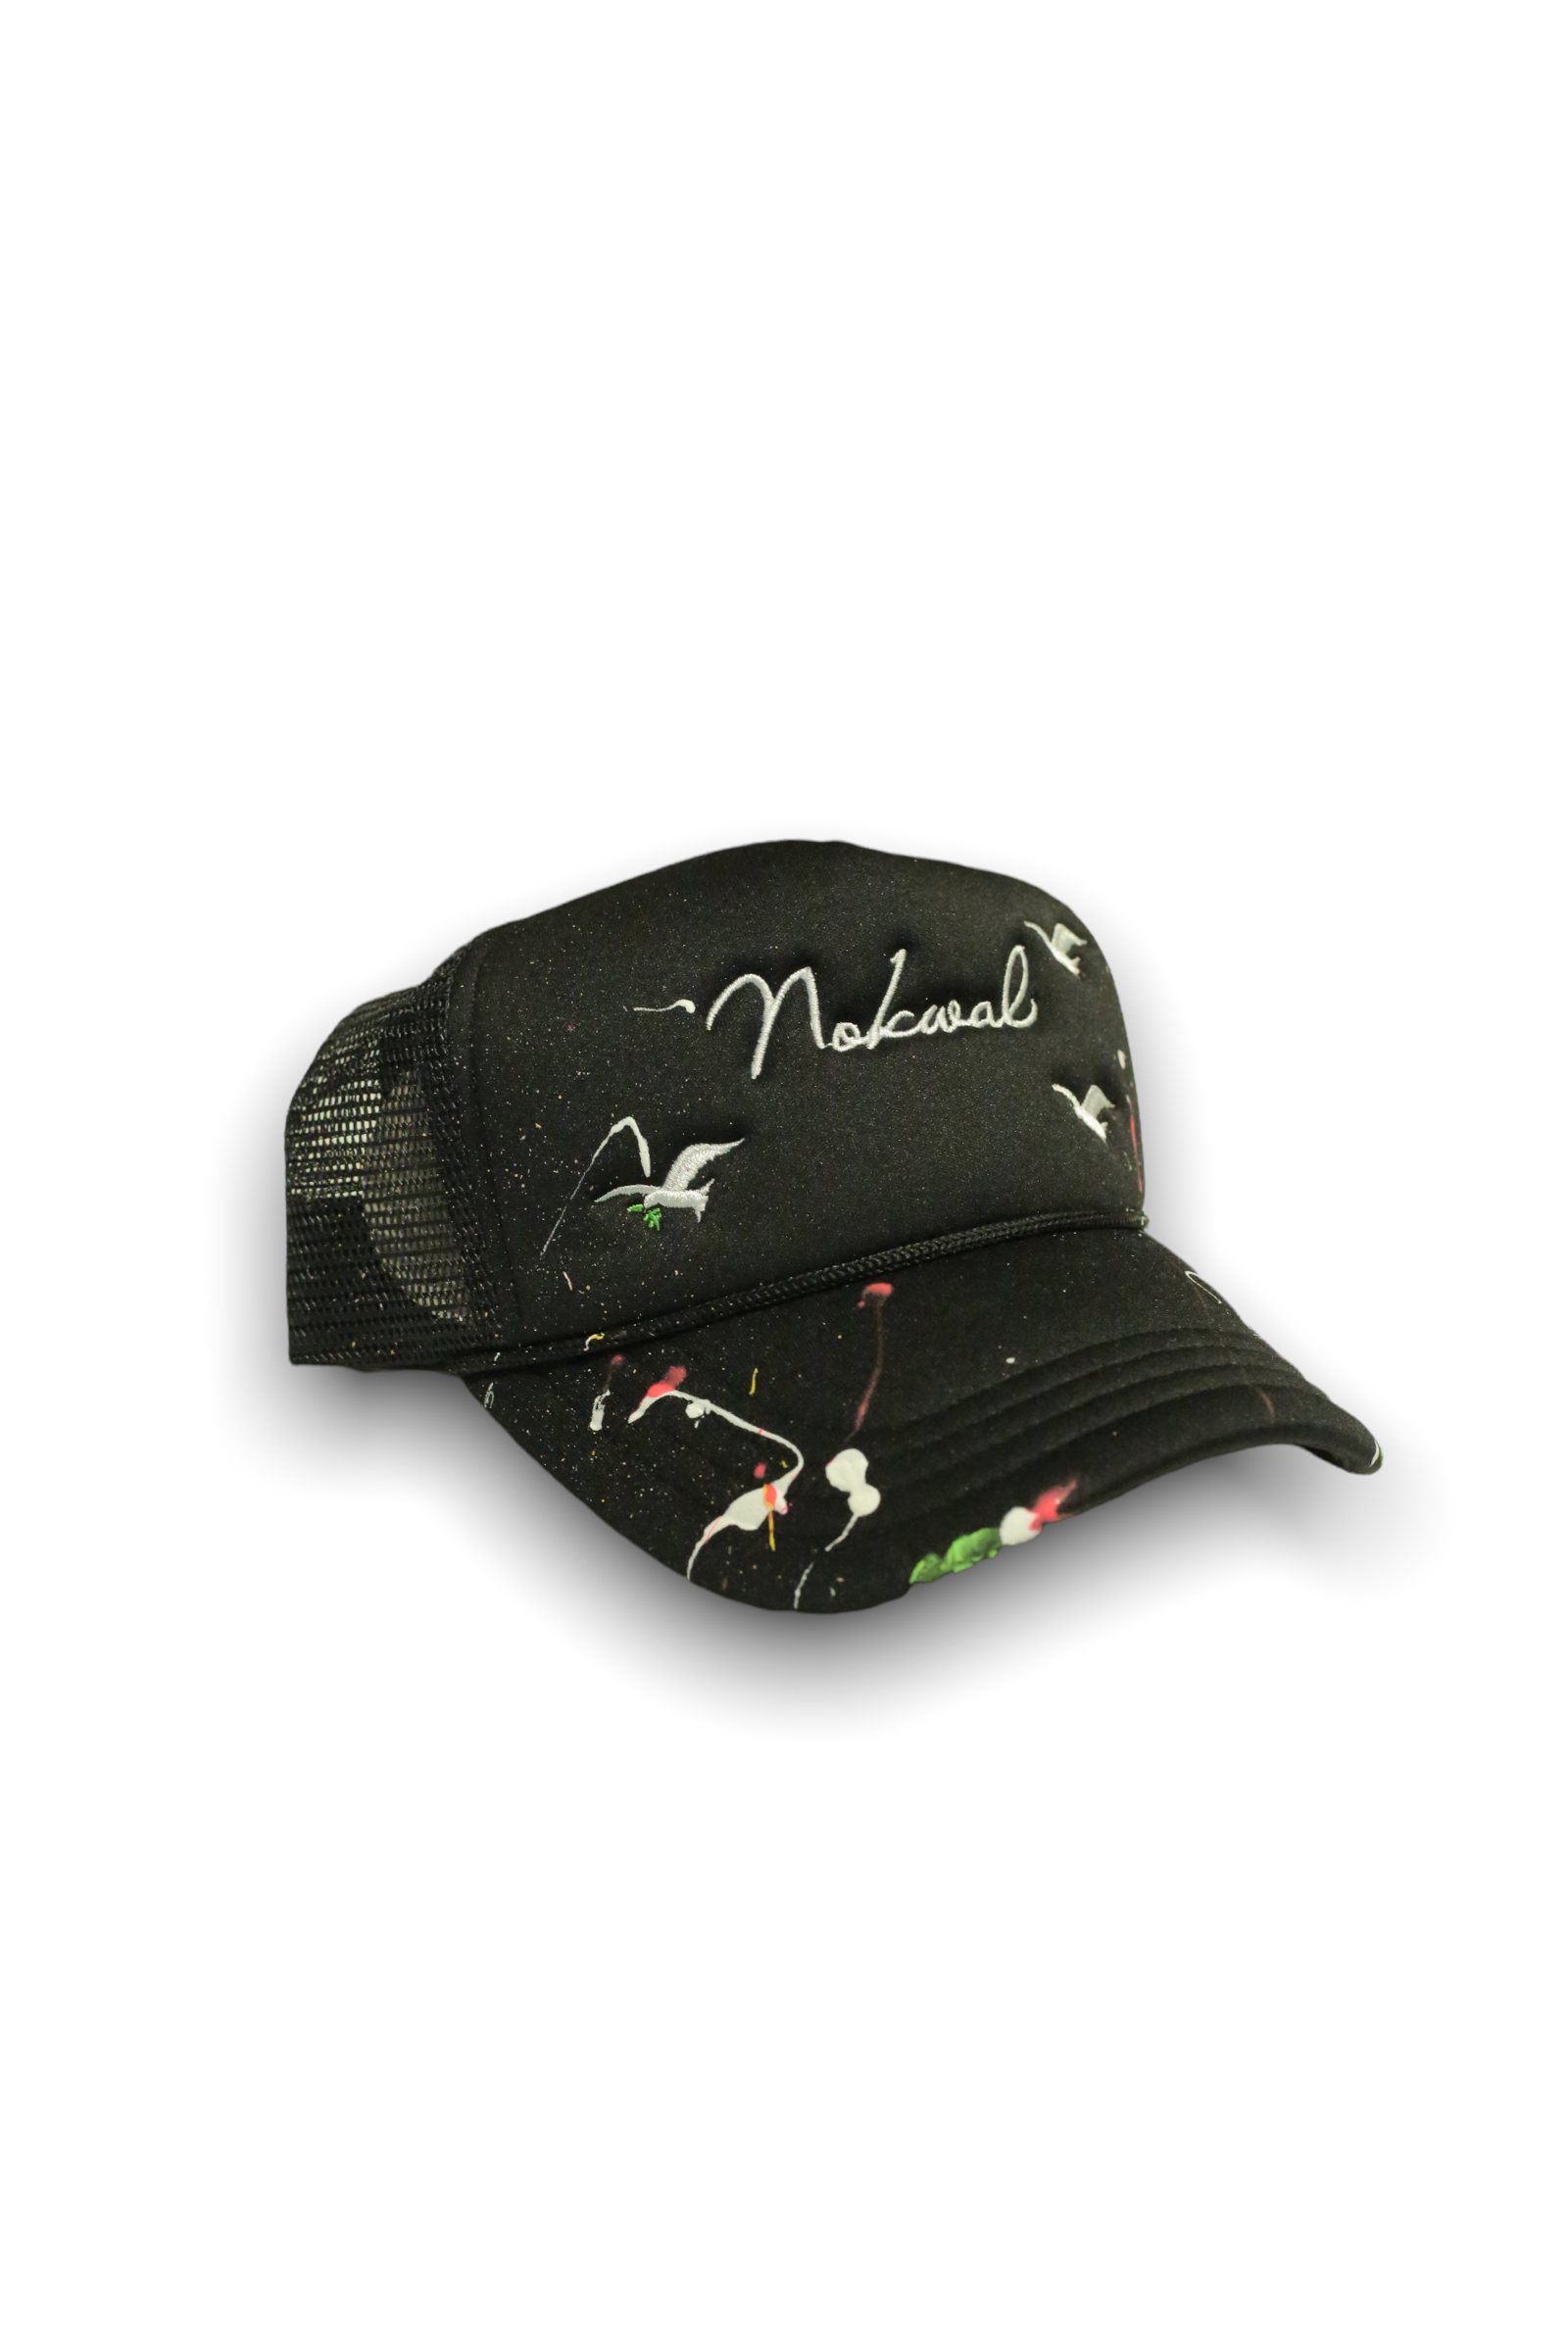 Nokwal Signature Black Foam Trucker Hat - WITH PAINT